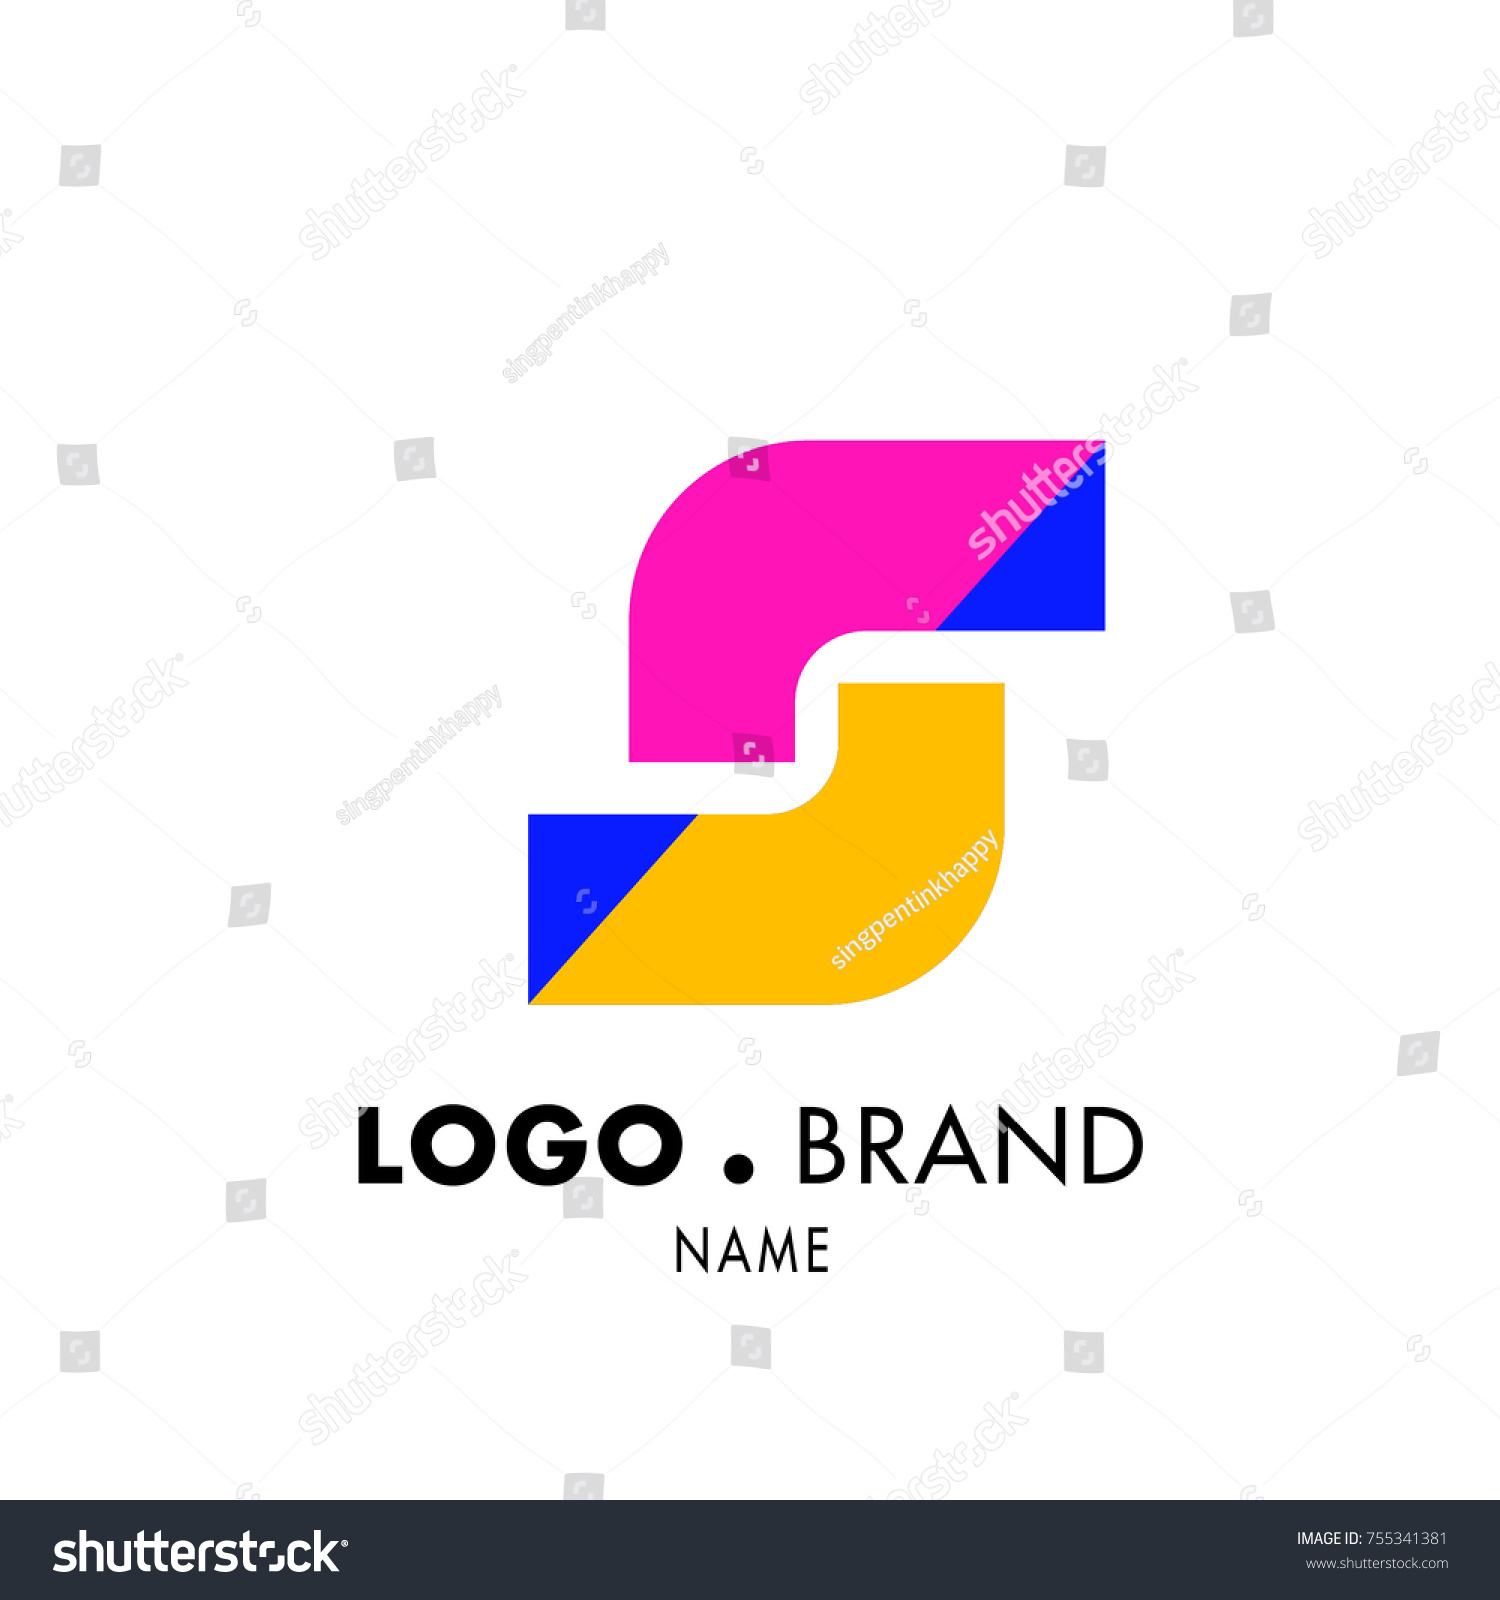 Simple Geometric Corporate Logo Design Stock Vector (Royalty Free ...